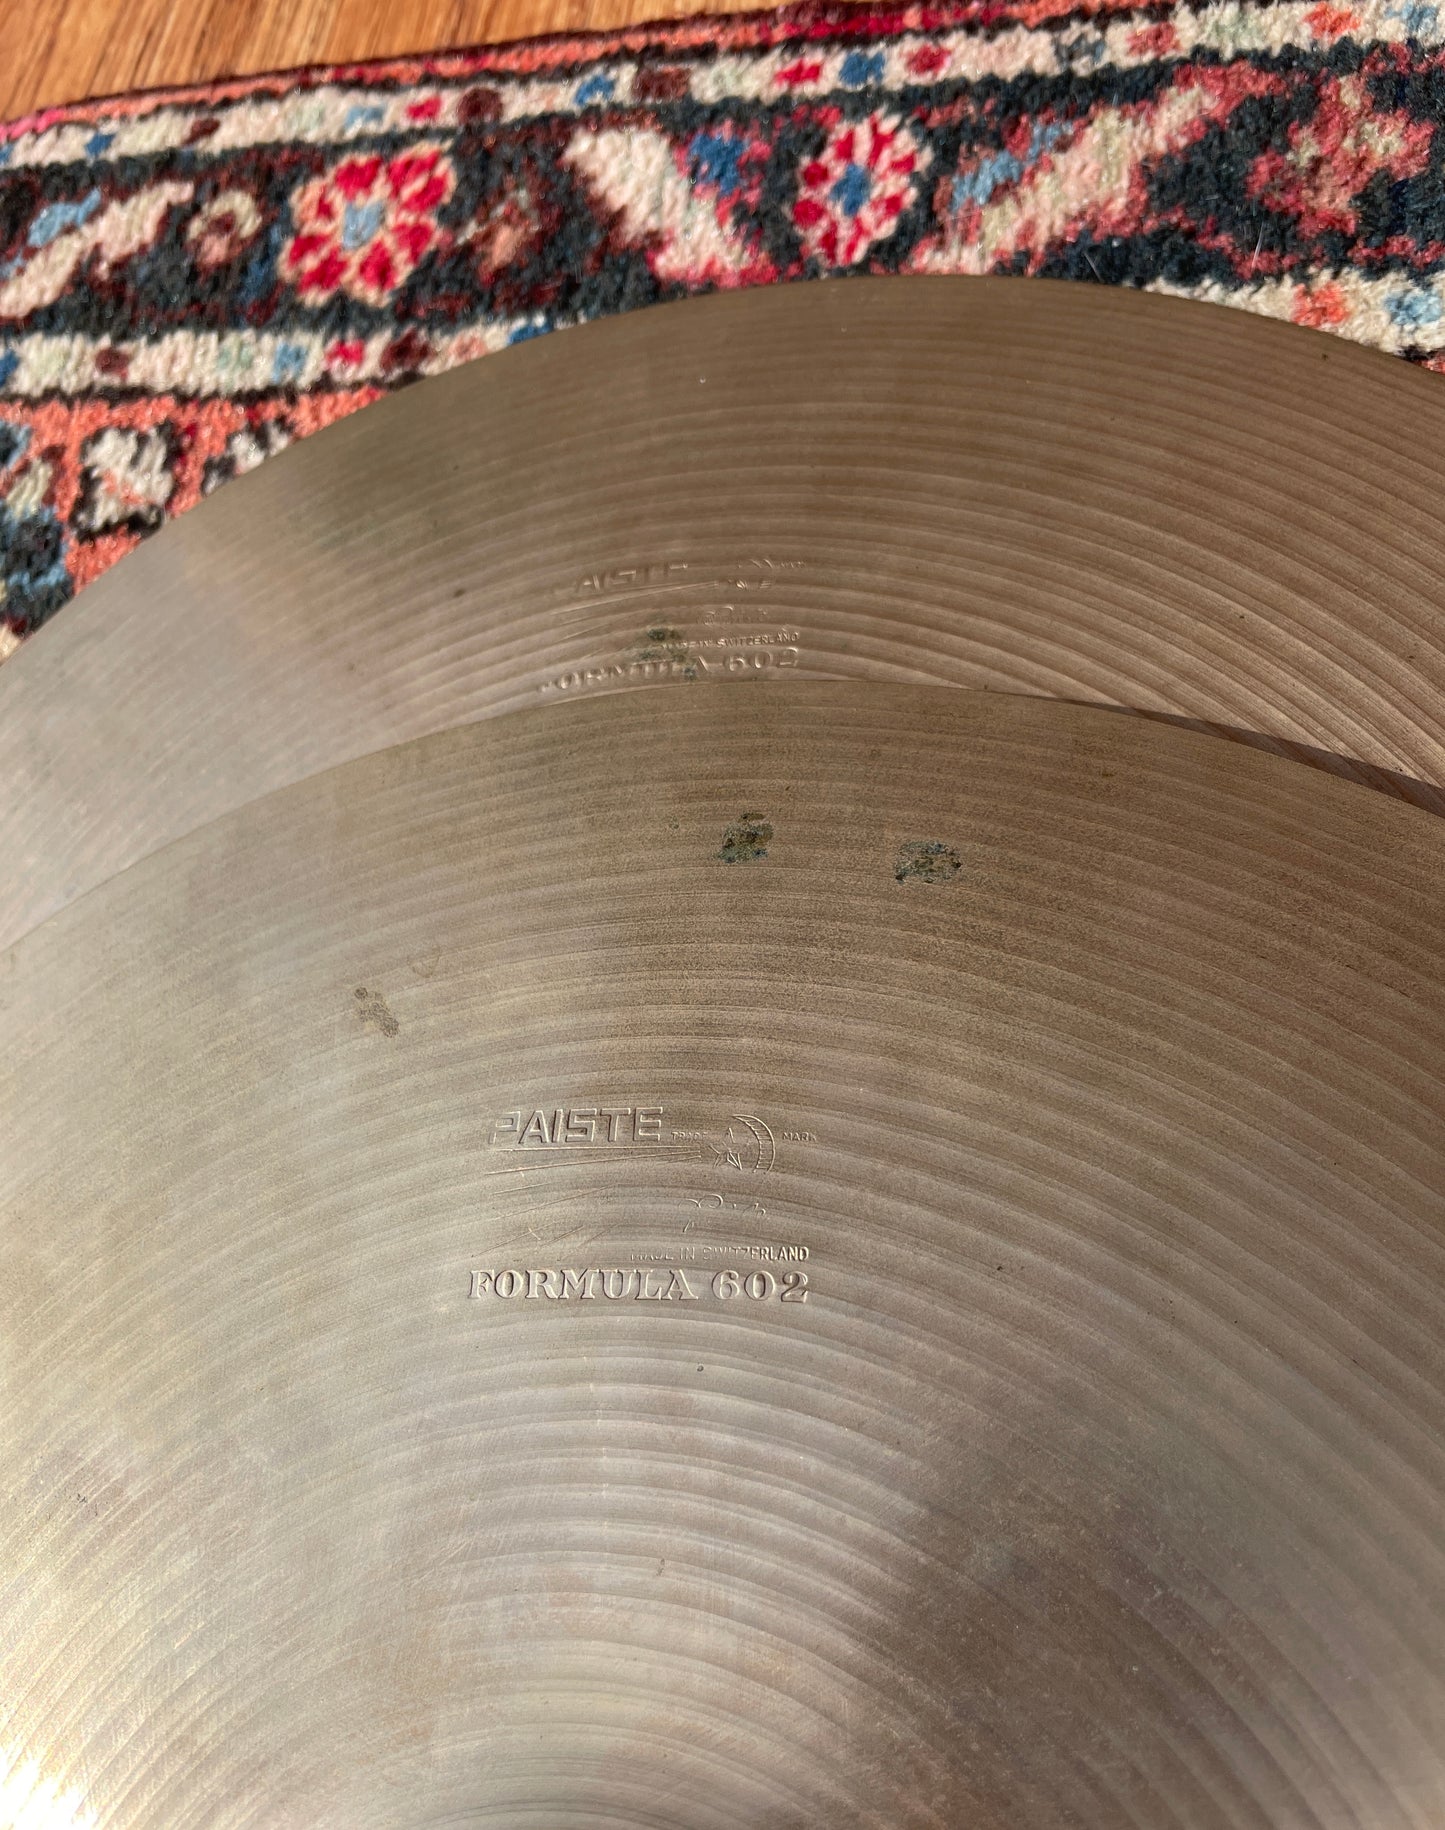 14" Paiste Pre-Serial Number Formula 602 Hi-Hat Cymbal Pair 830g/938g #38